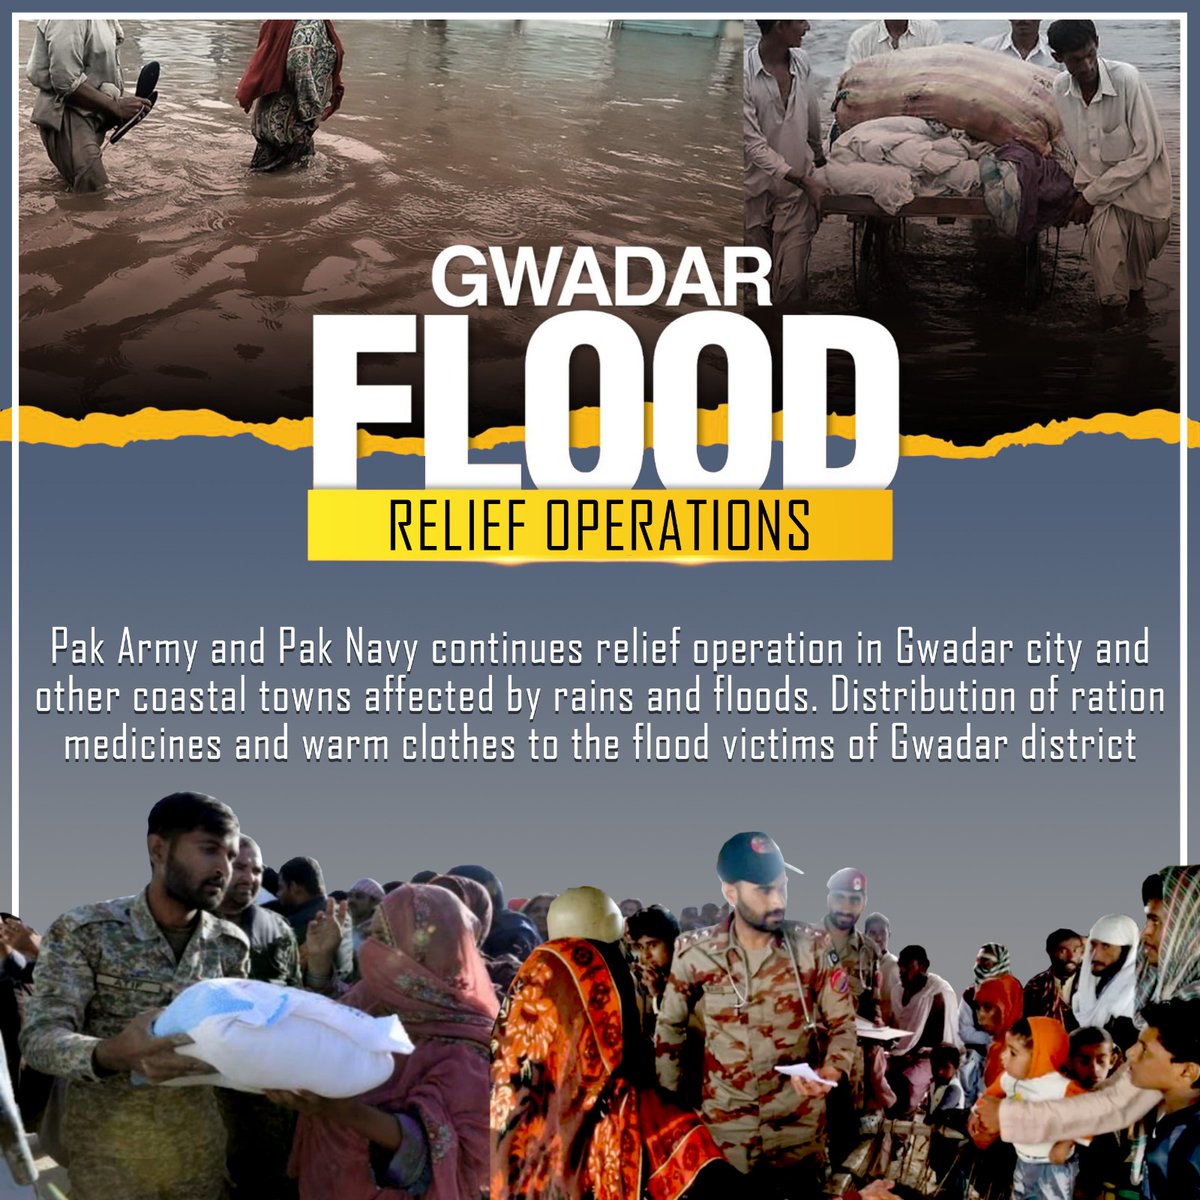 Heroes in Uniform: Army Extends Helping Hand to Flood-Stricken Gawadar 💙🌊 #UnityInAdversity #SaluteToService'
#Balochistan #เฟสล่ม